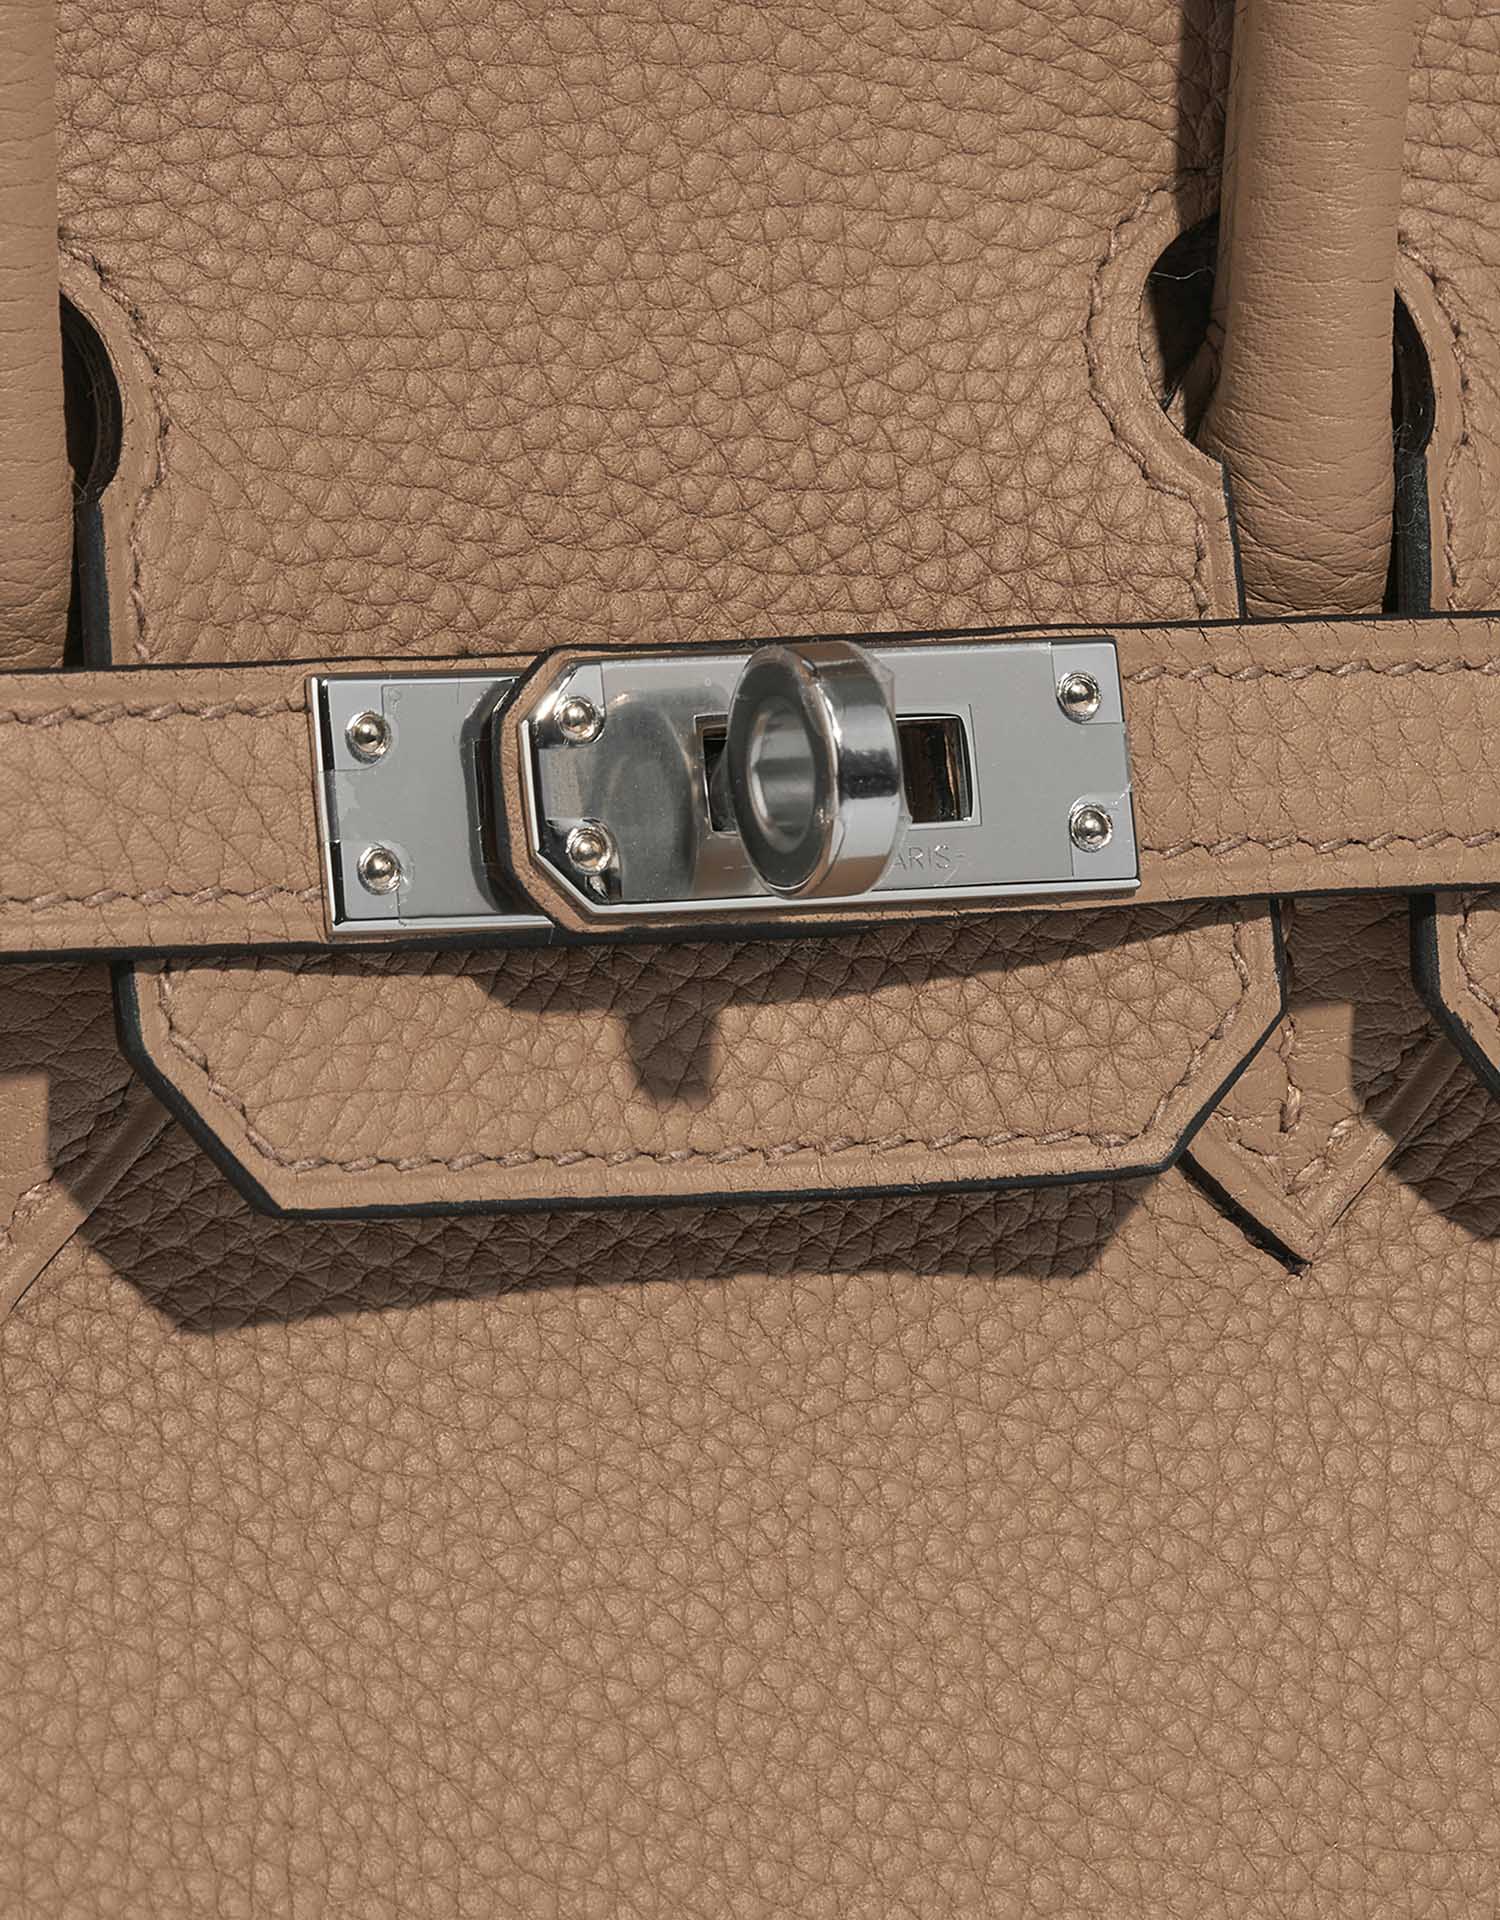 Hermes Birkin 25 Chai Bag Palladium Hardware Togo Leather